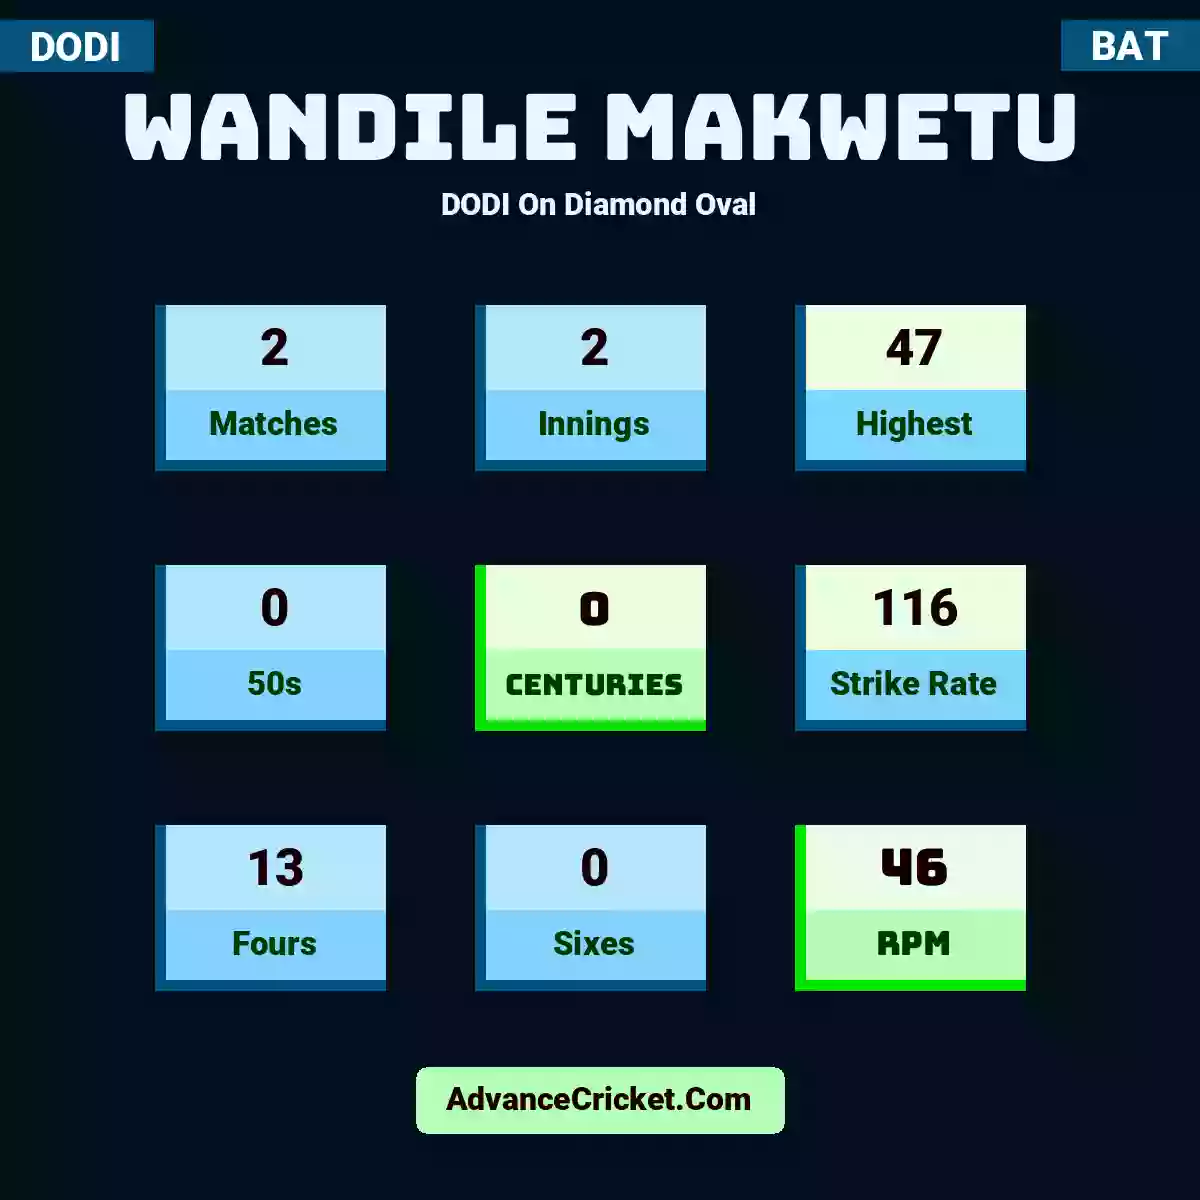 Wandile Makwetu DODI  On Diamond Oval, Wandile Makwetu played 2 matches, scored 47 runs as highest, 0 half-centuries, and 0 centuries, with a strike rate of 116. W.Makwetu hit 13 fours and 0 sixes, with an RPM of 46.